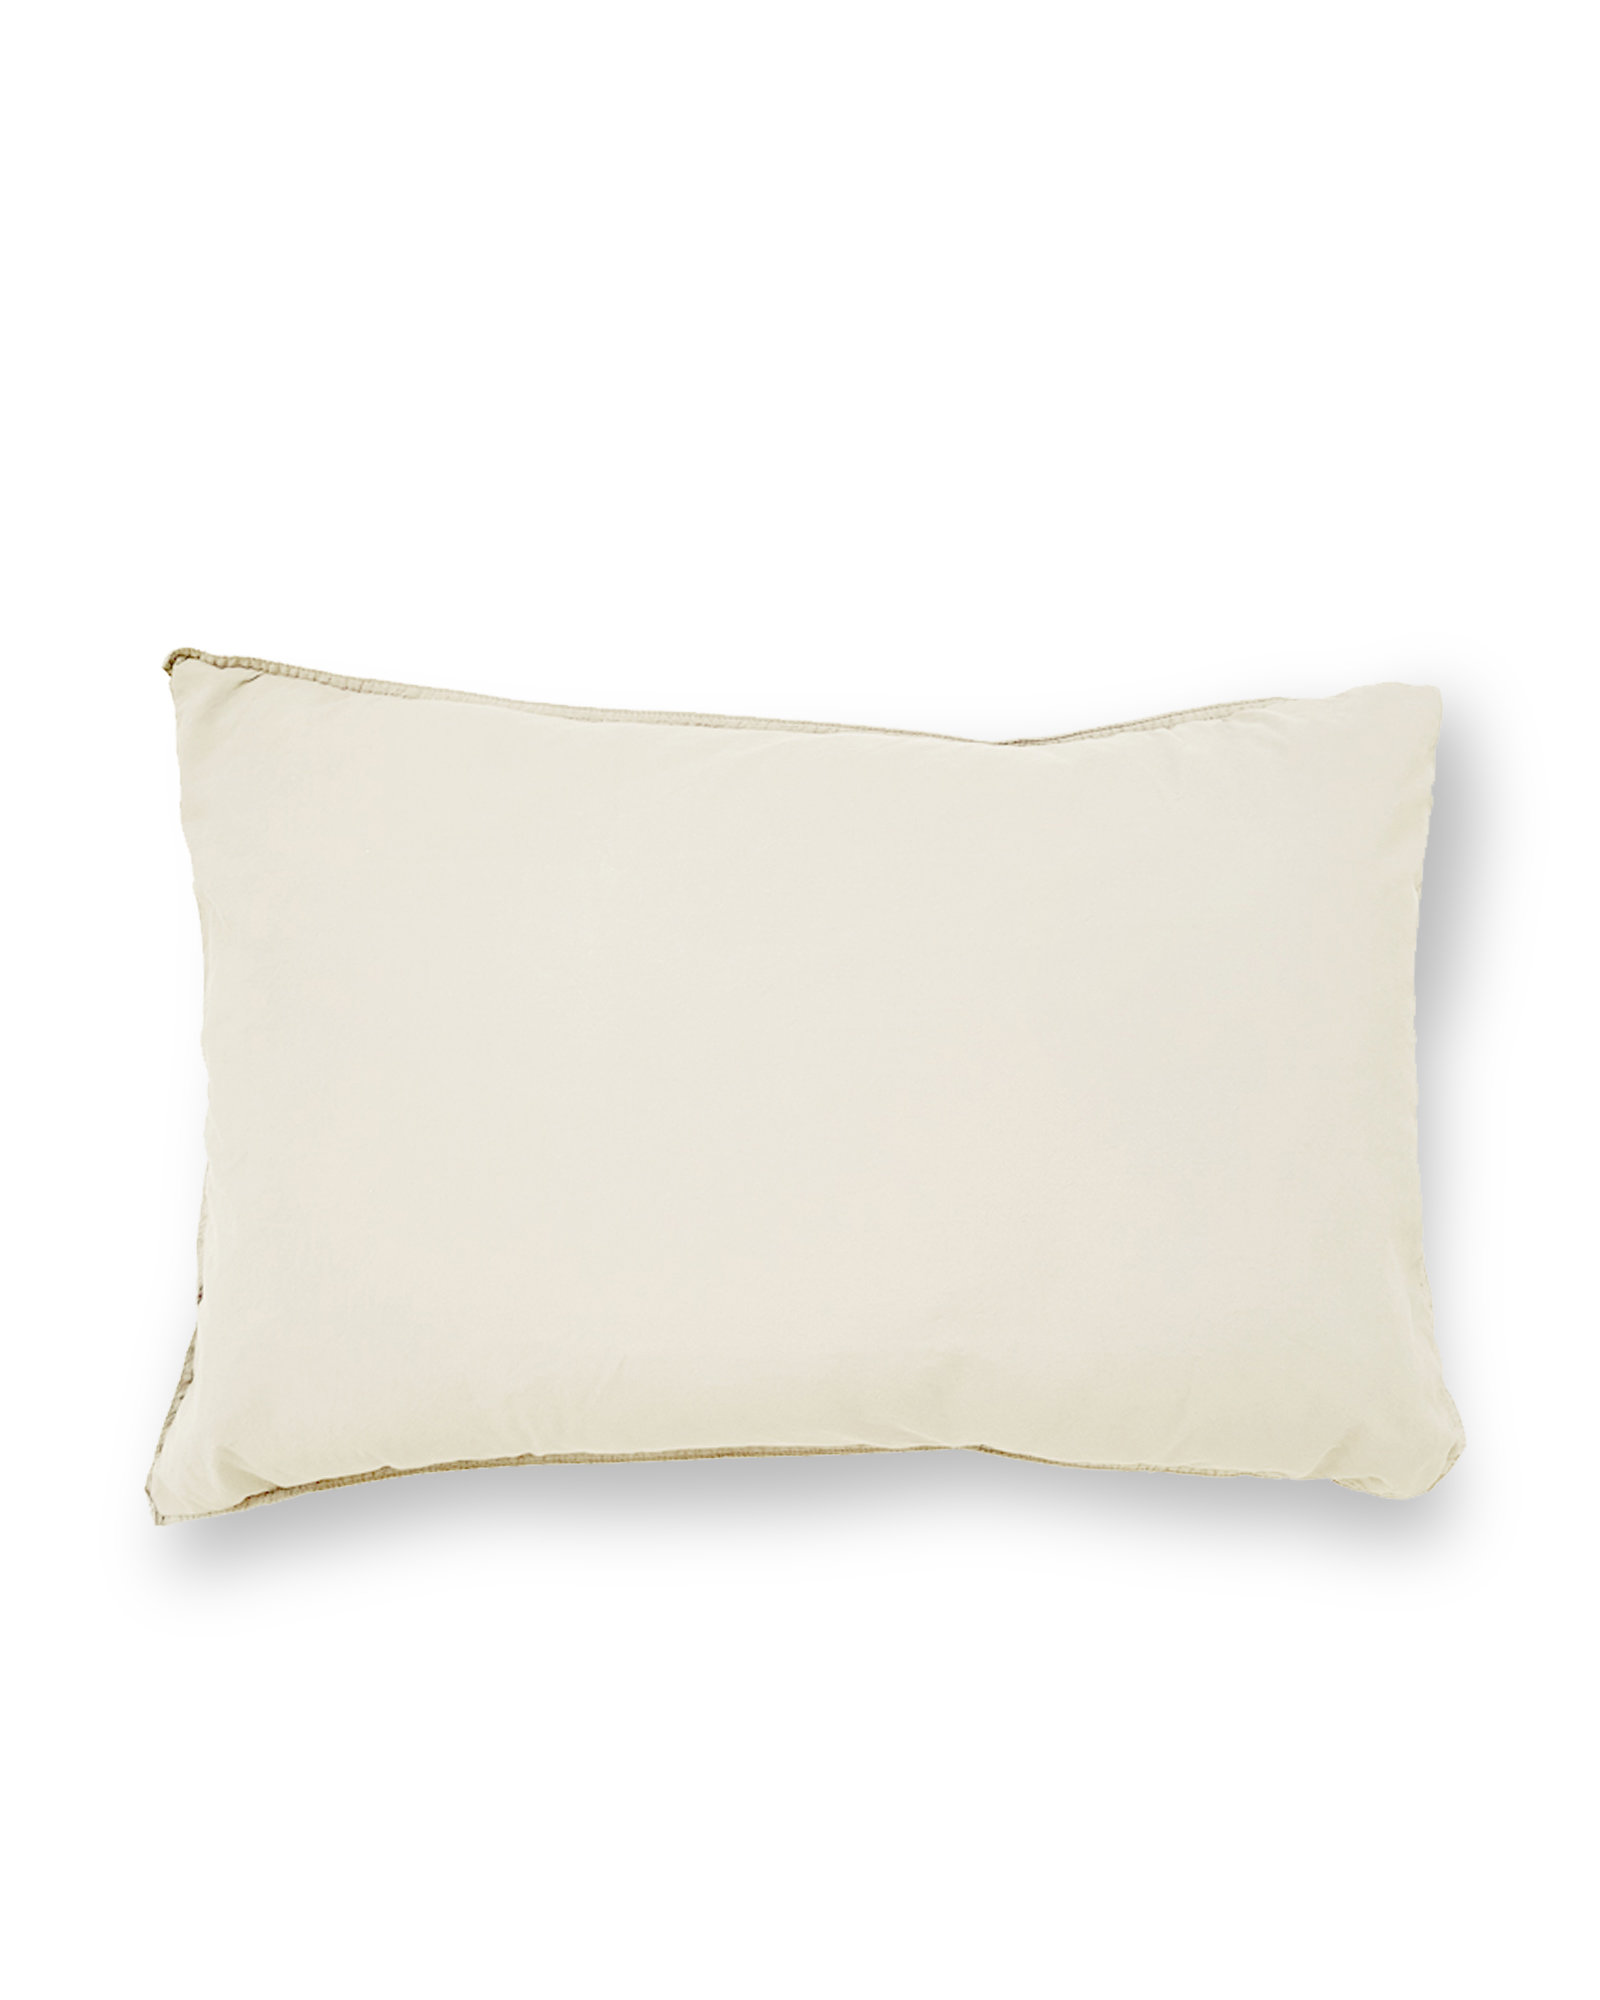 MARIE-MARIE - Cushion VINTAGE COTTON Oatmeal - 40x60 cm - Oatmeal